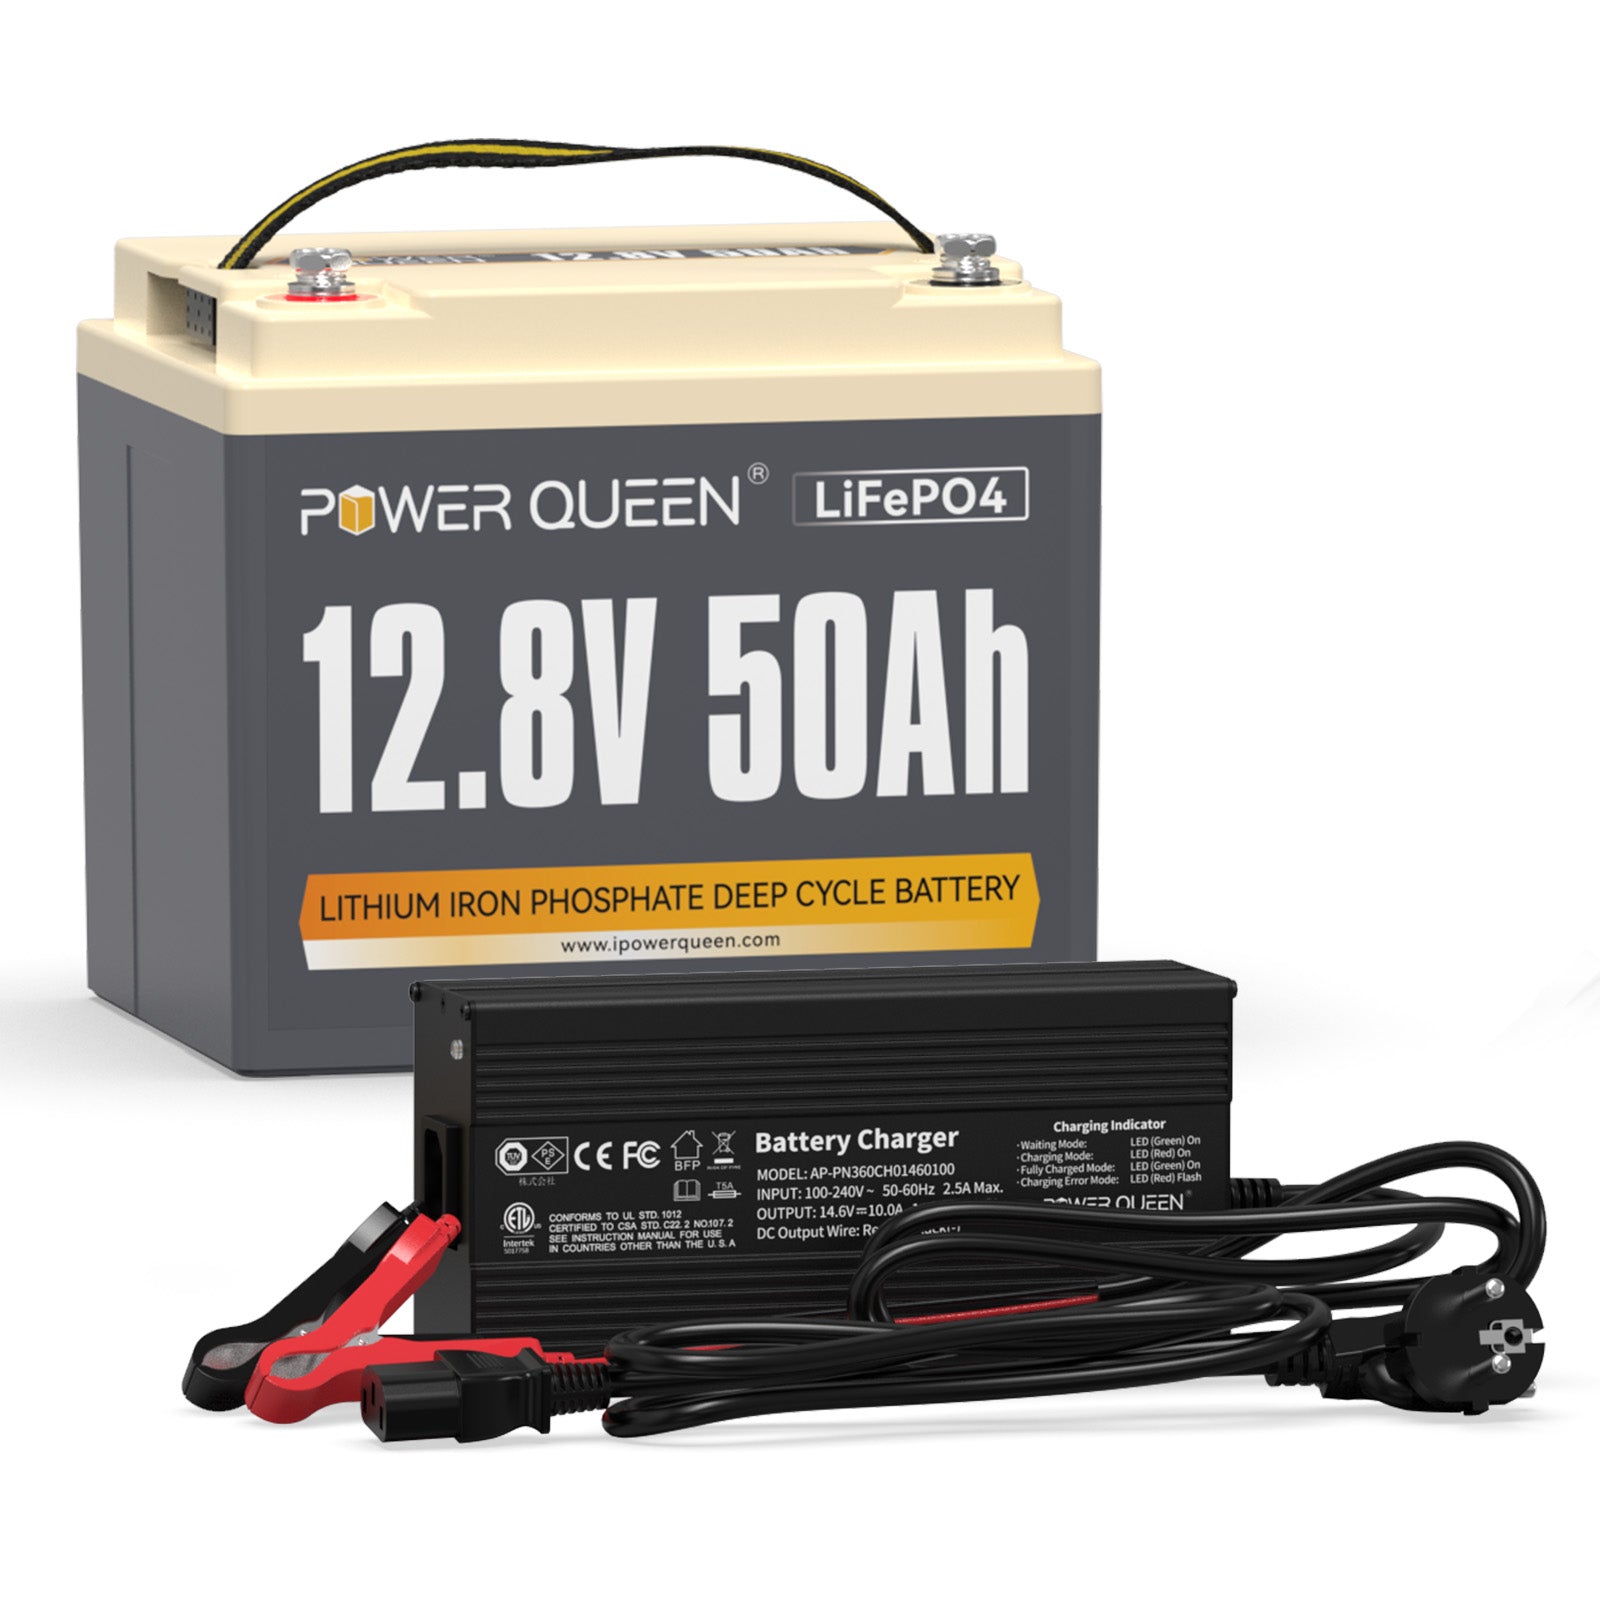 Batteria LiFePO4 Power Queen 12,8 V 50 Ah con caricabatterie LiFePO4 14,6 V 10 A